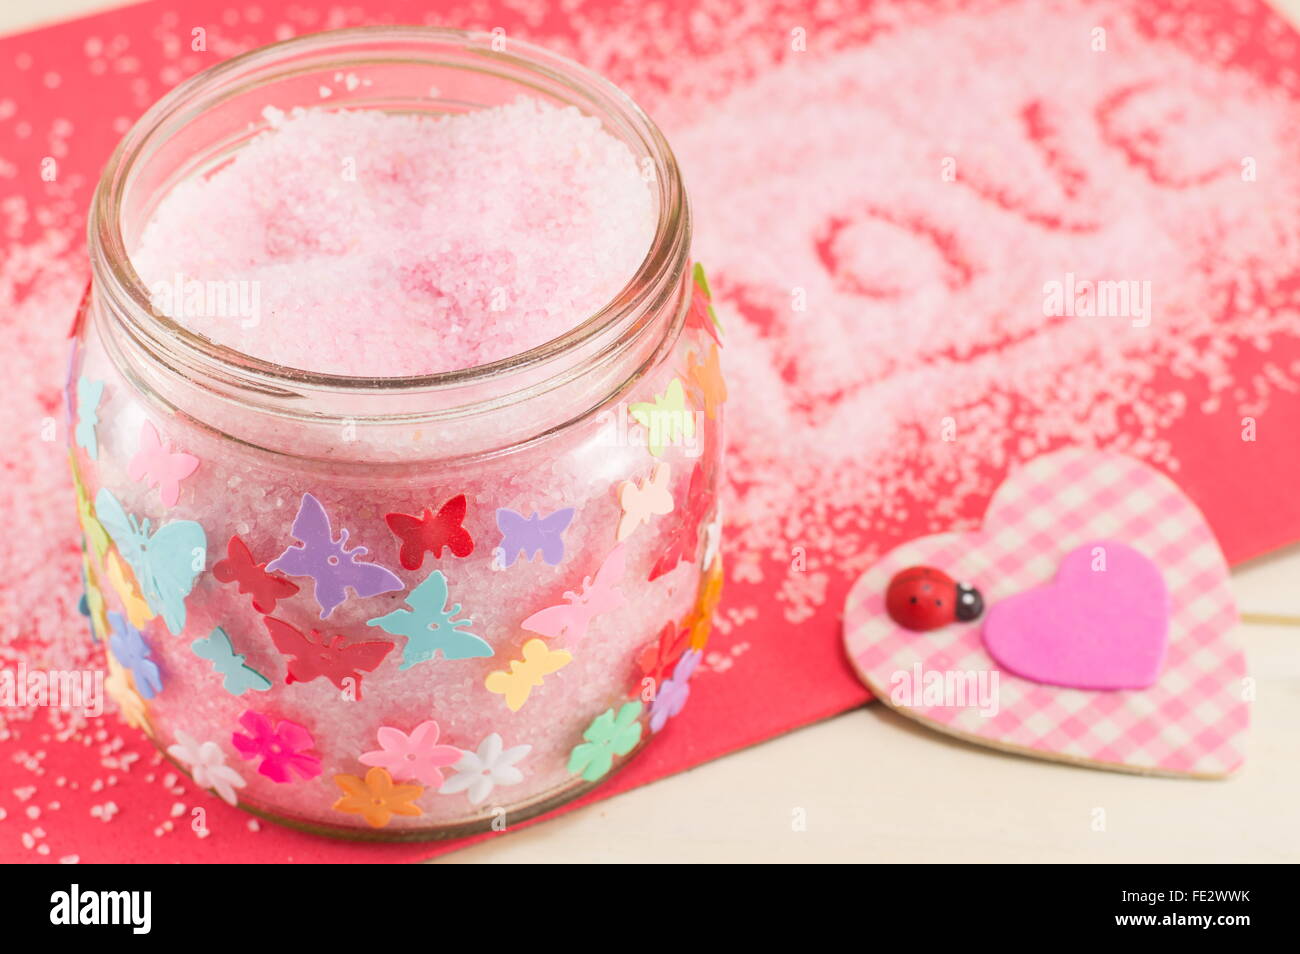 Bath salt in a jar next to a pink plaid heart symbol Stock Photo